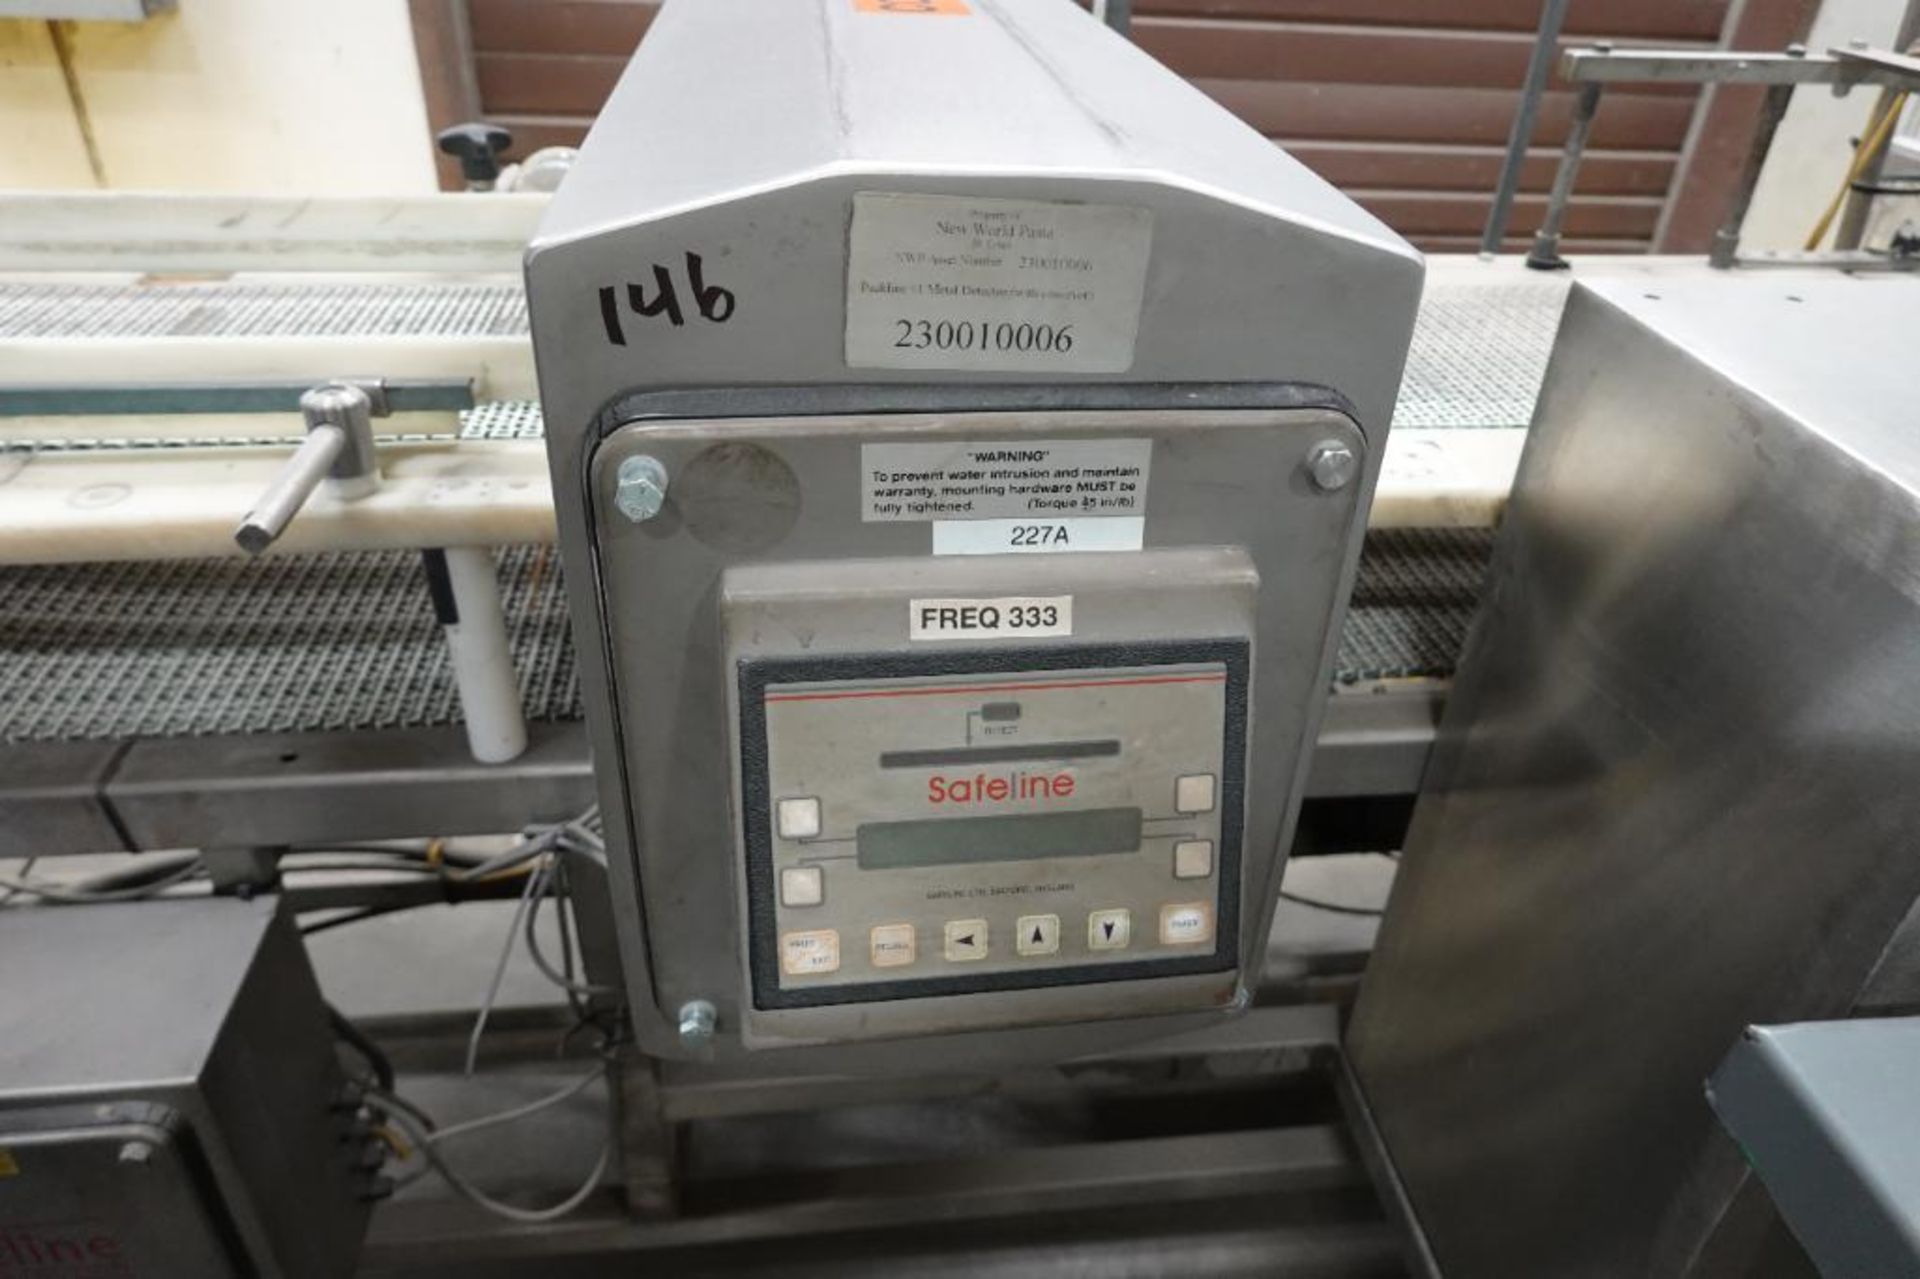 Safeline metal detector with conveyor - Image 4 of 11